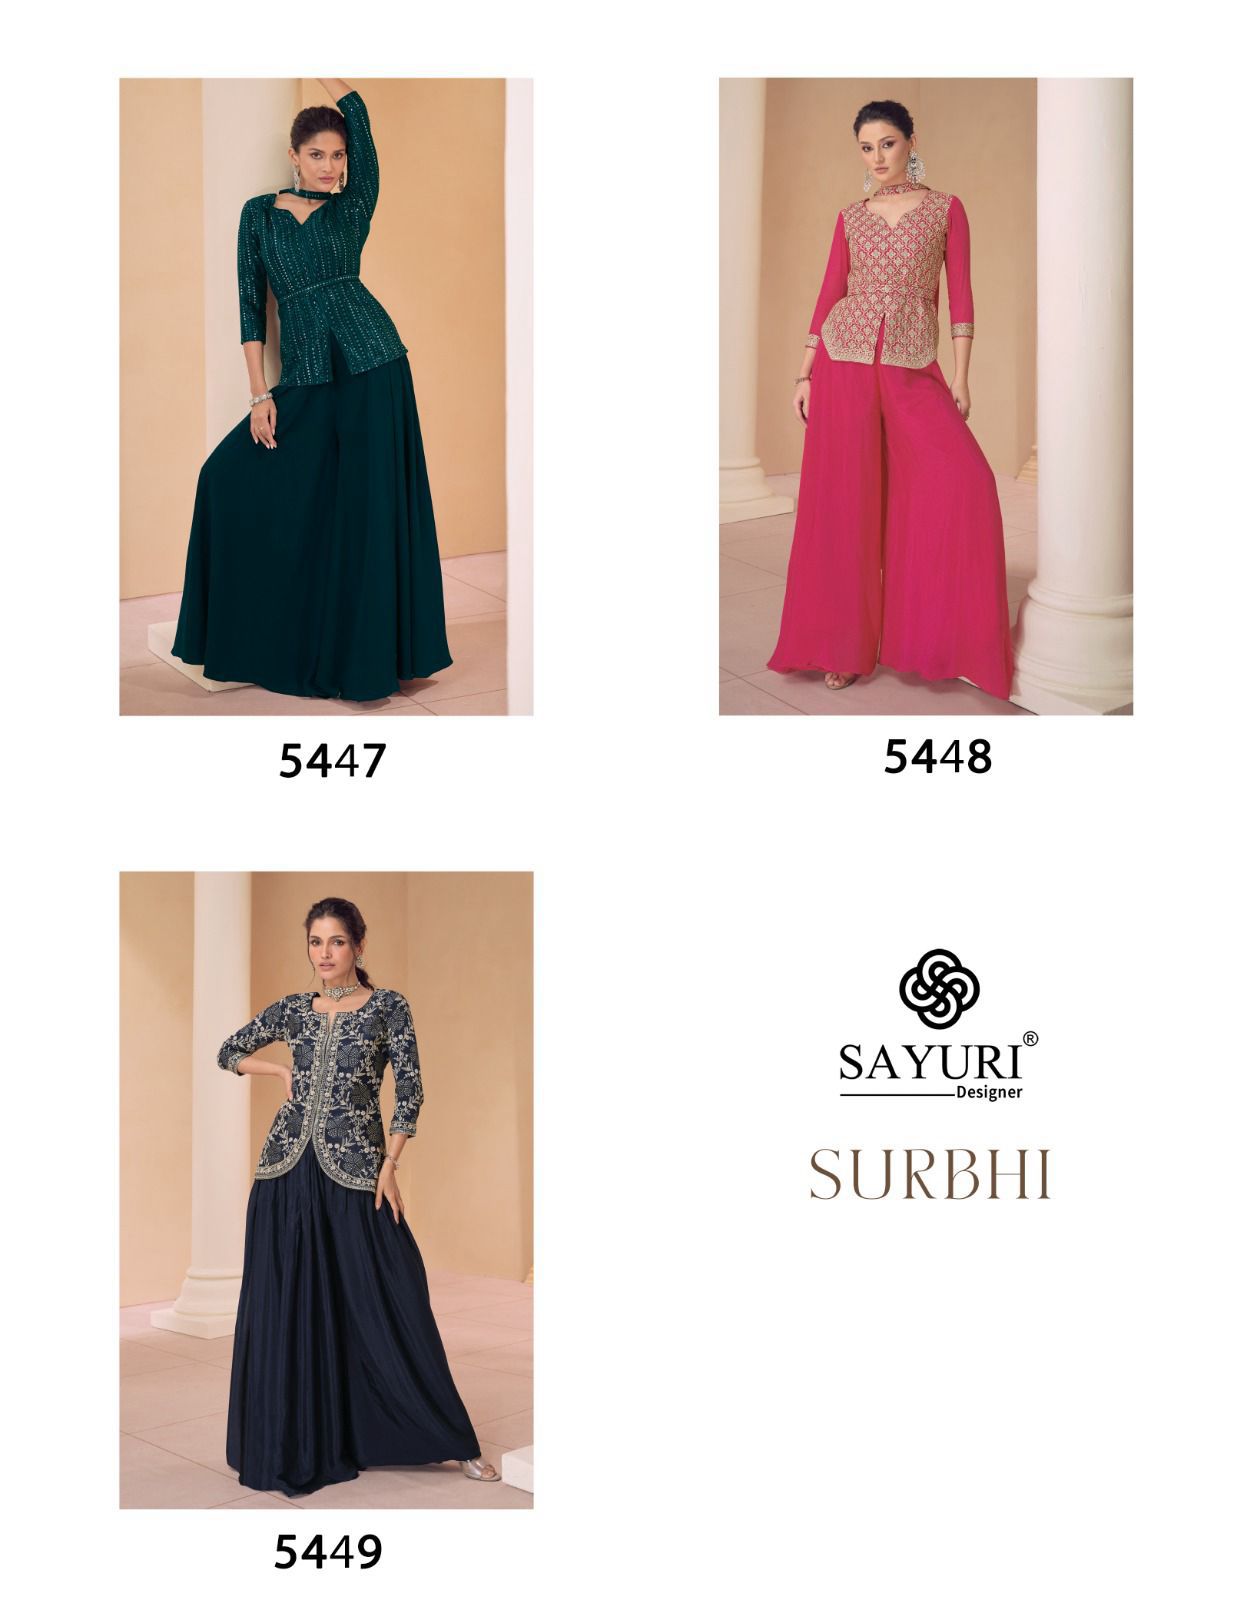 Sayuri Surbhi collection 1